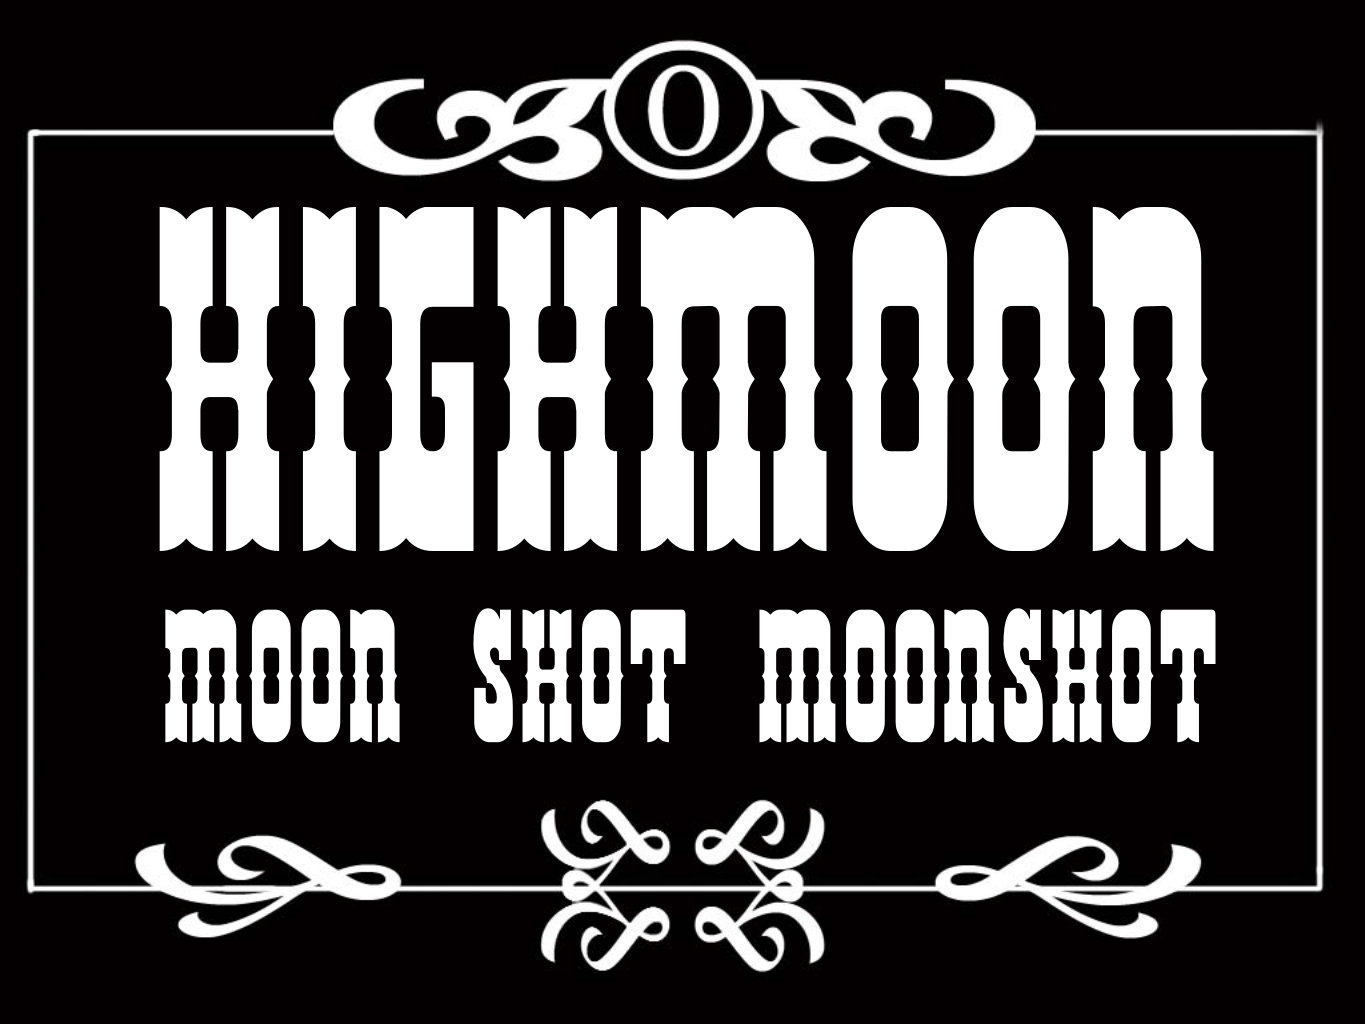 HIGHMOON: moon shot moonshot